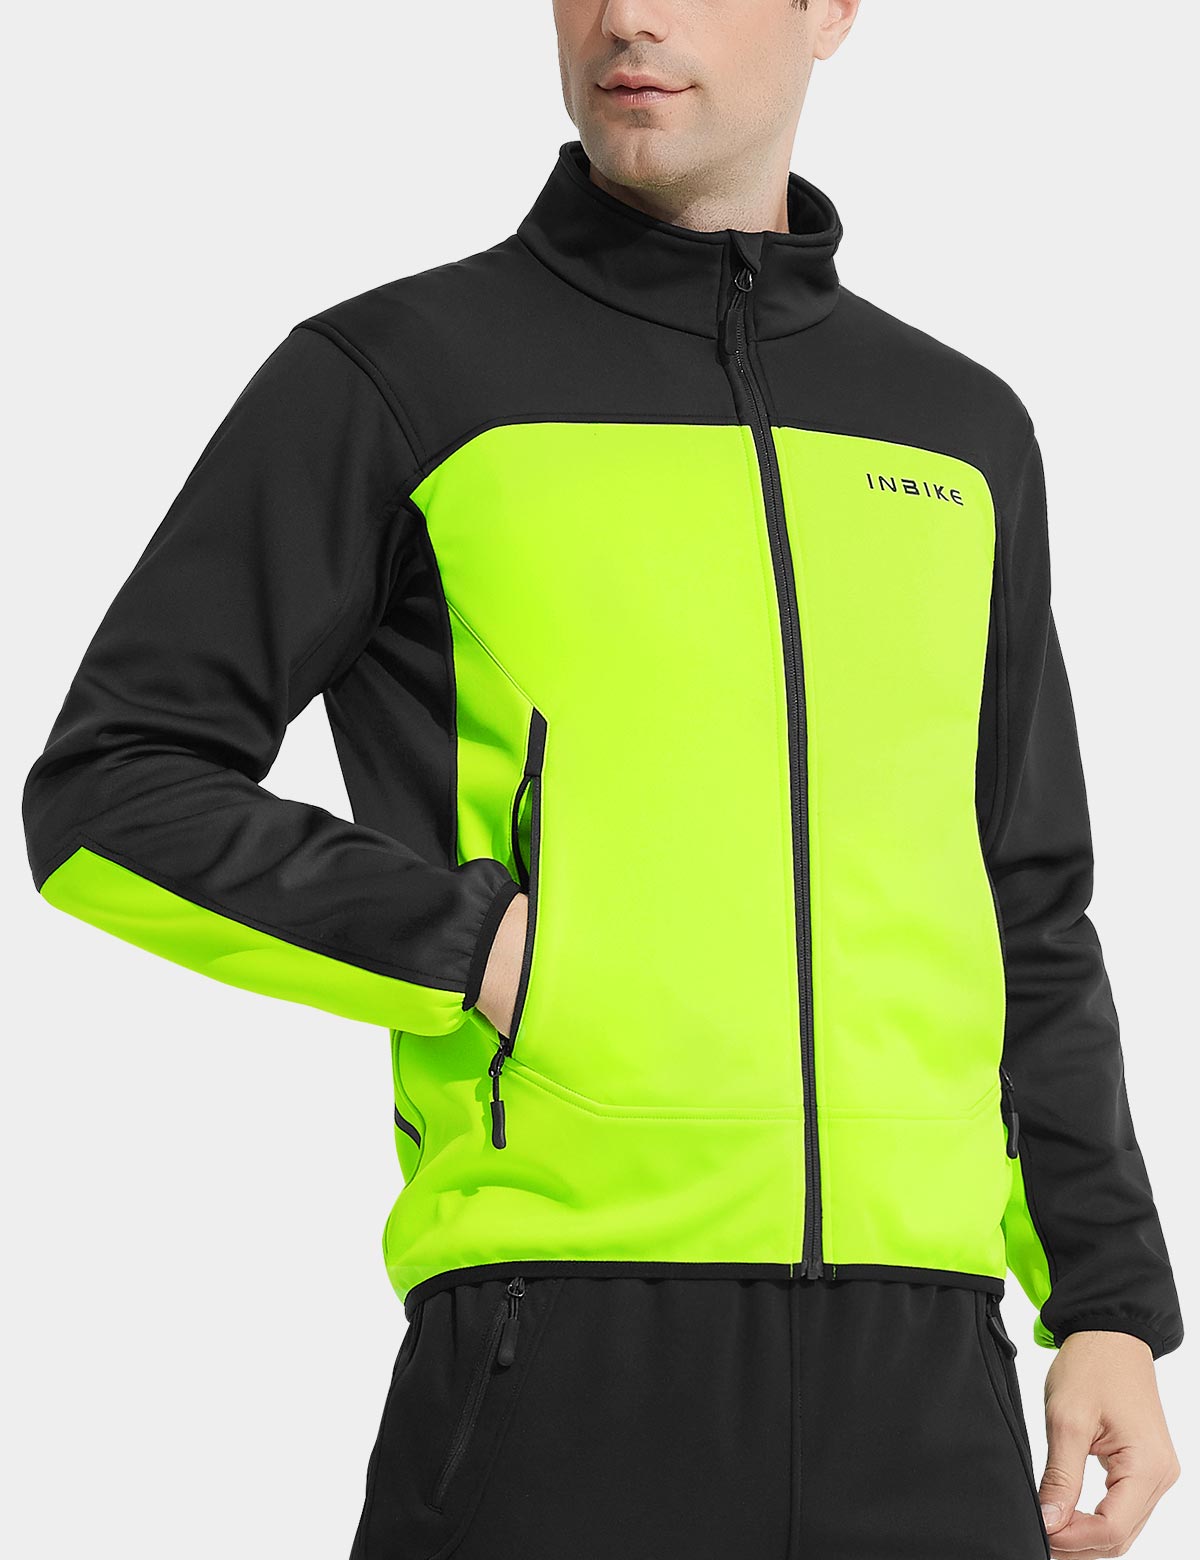 INBIKE Cycling Jacket for Men Running Biking Coat Windbreaker Thermal Fleece Windproof Reflective Cold Weather